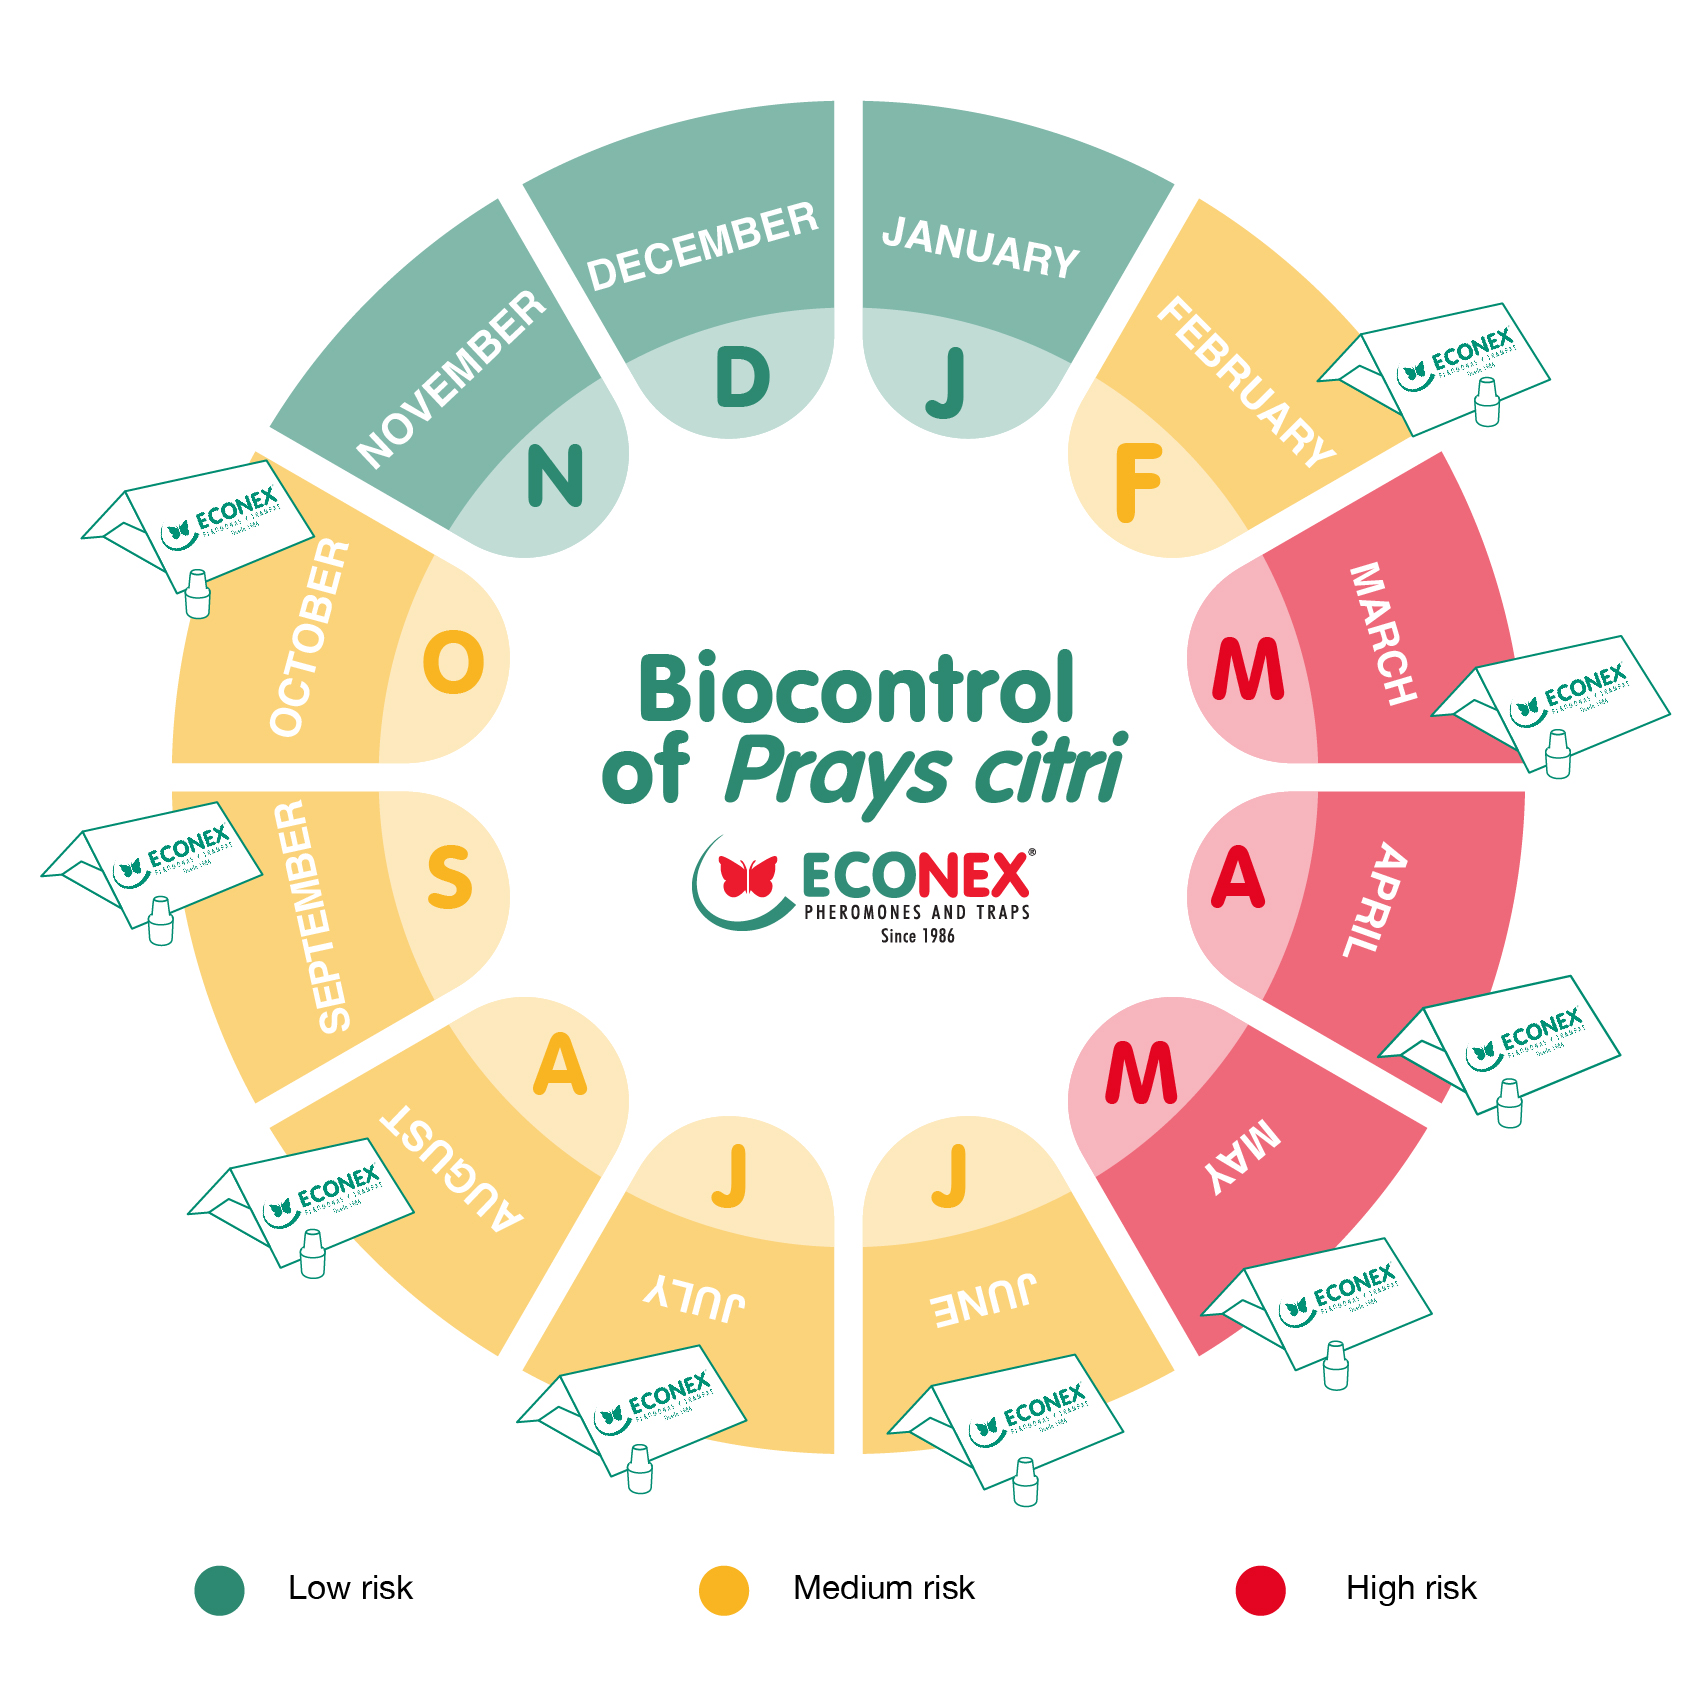 Biocontrol of prays citri with ECONEX solutions